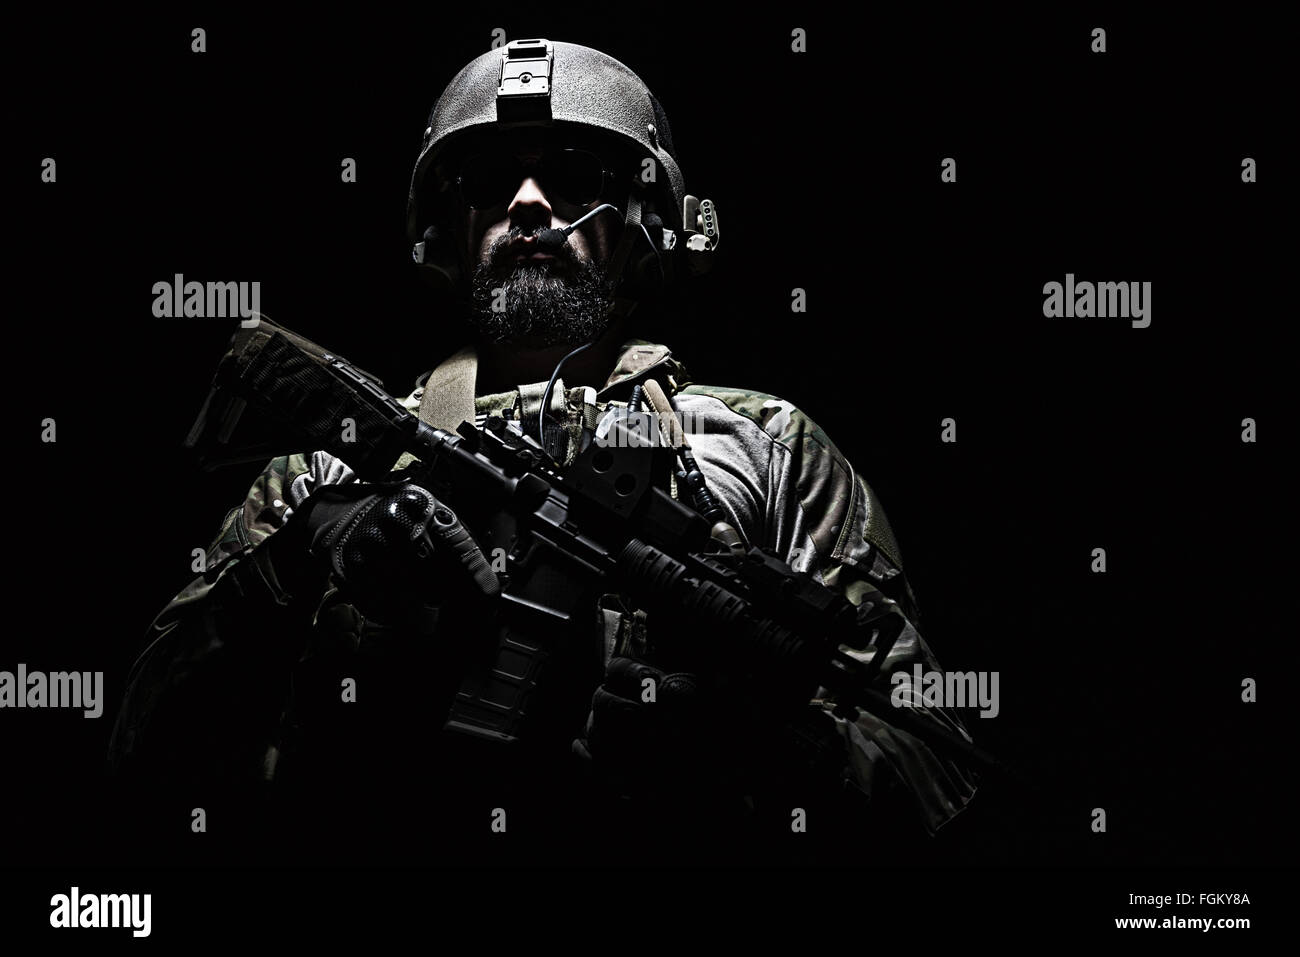 US Army Green Beret Stockfoto